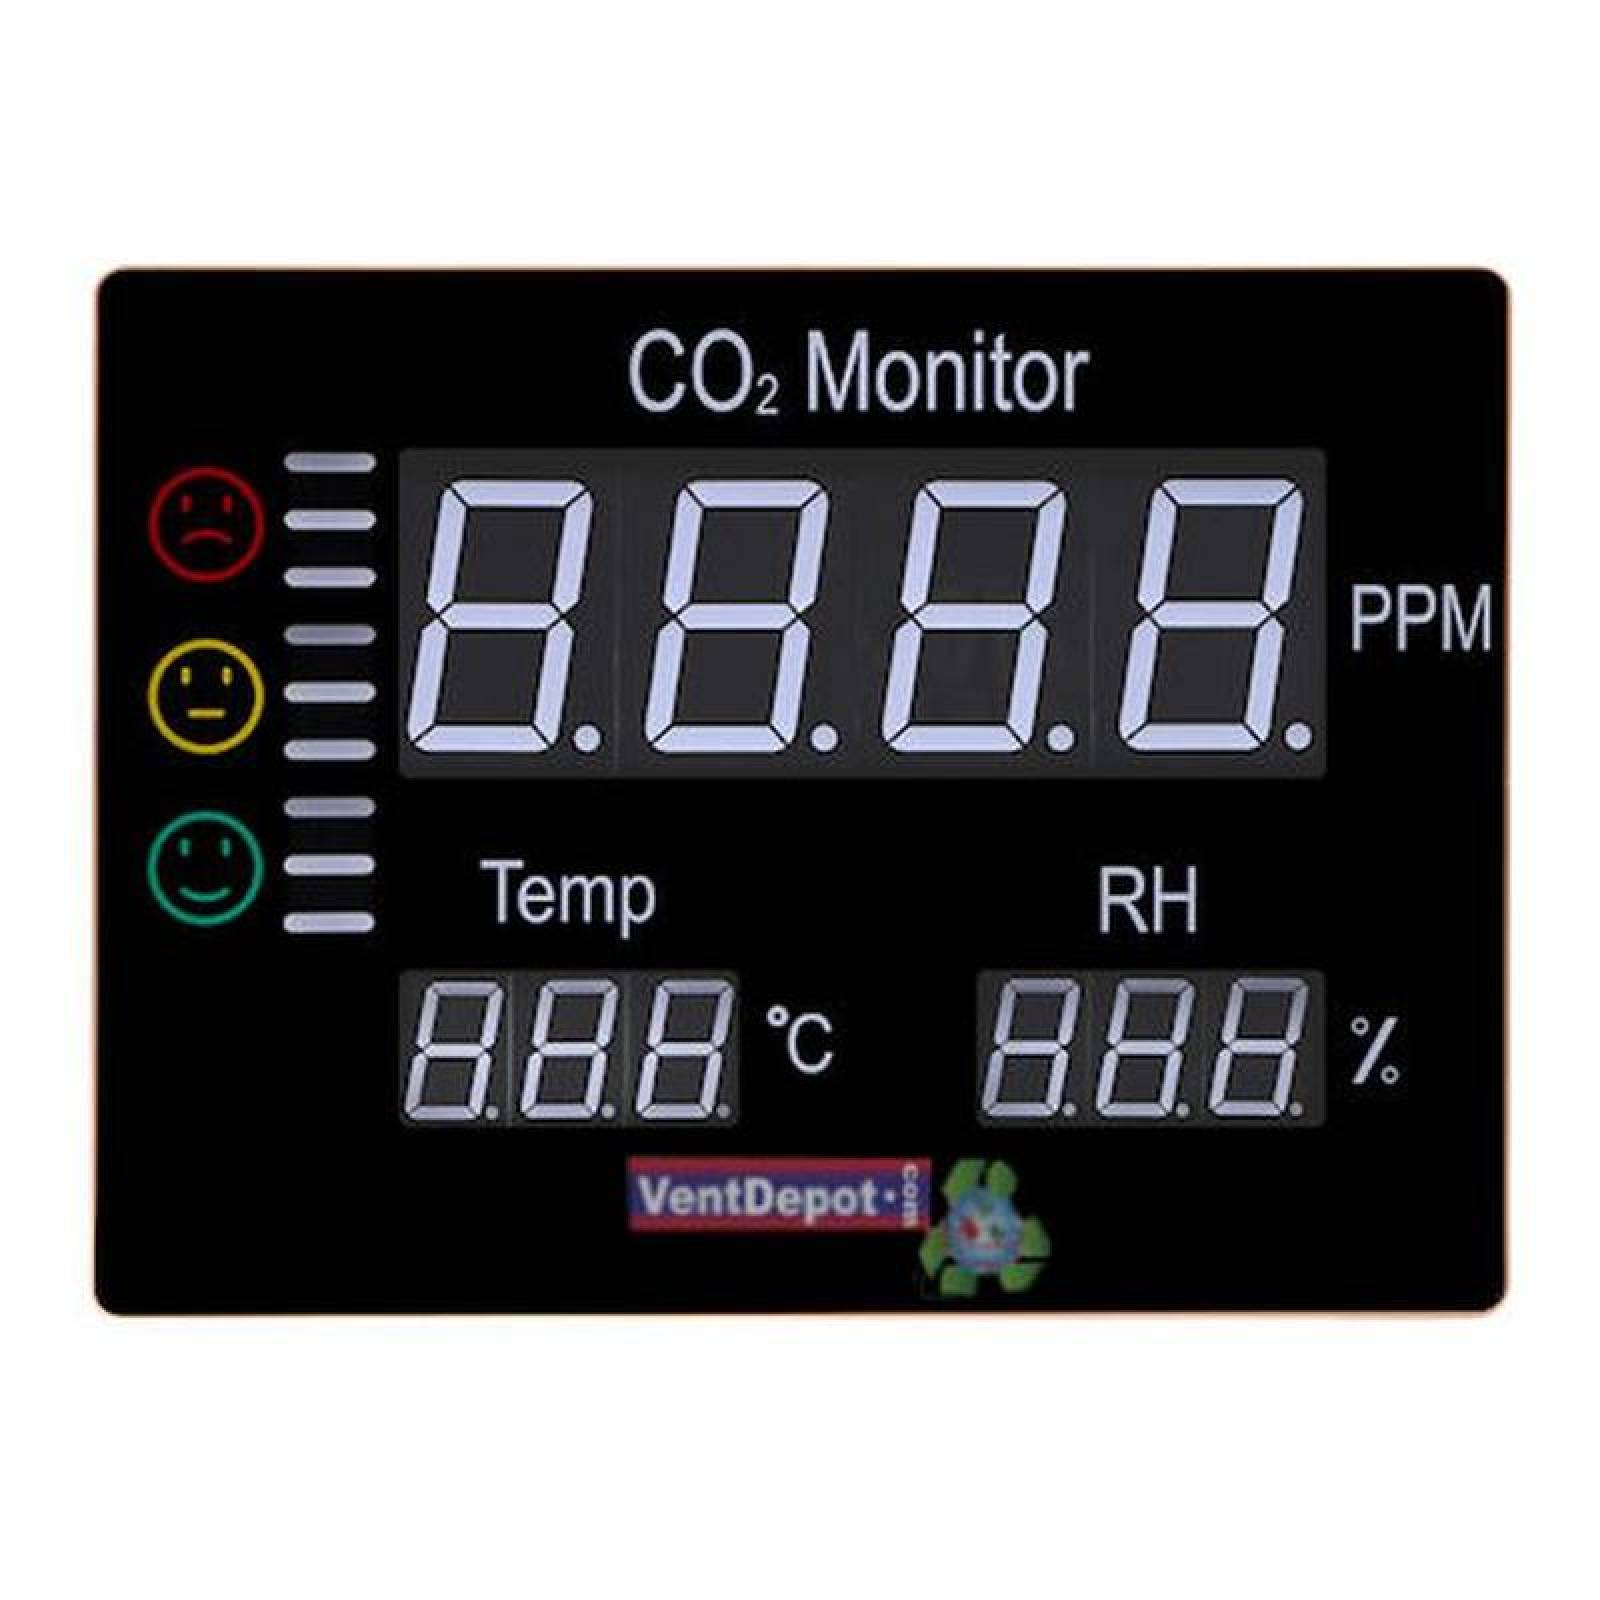 Medidor de Dioxido de Carbono MXDCX-001-4 Escala CO2 de 0 a 9999 PPMTemperatura -10 a 100CHumedad 0,1 a 99,9porciento RH 220V Consumo de energía 9V, DioxMonitor